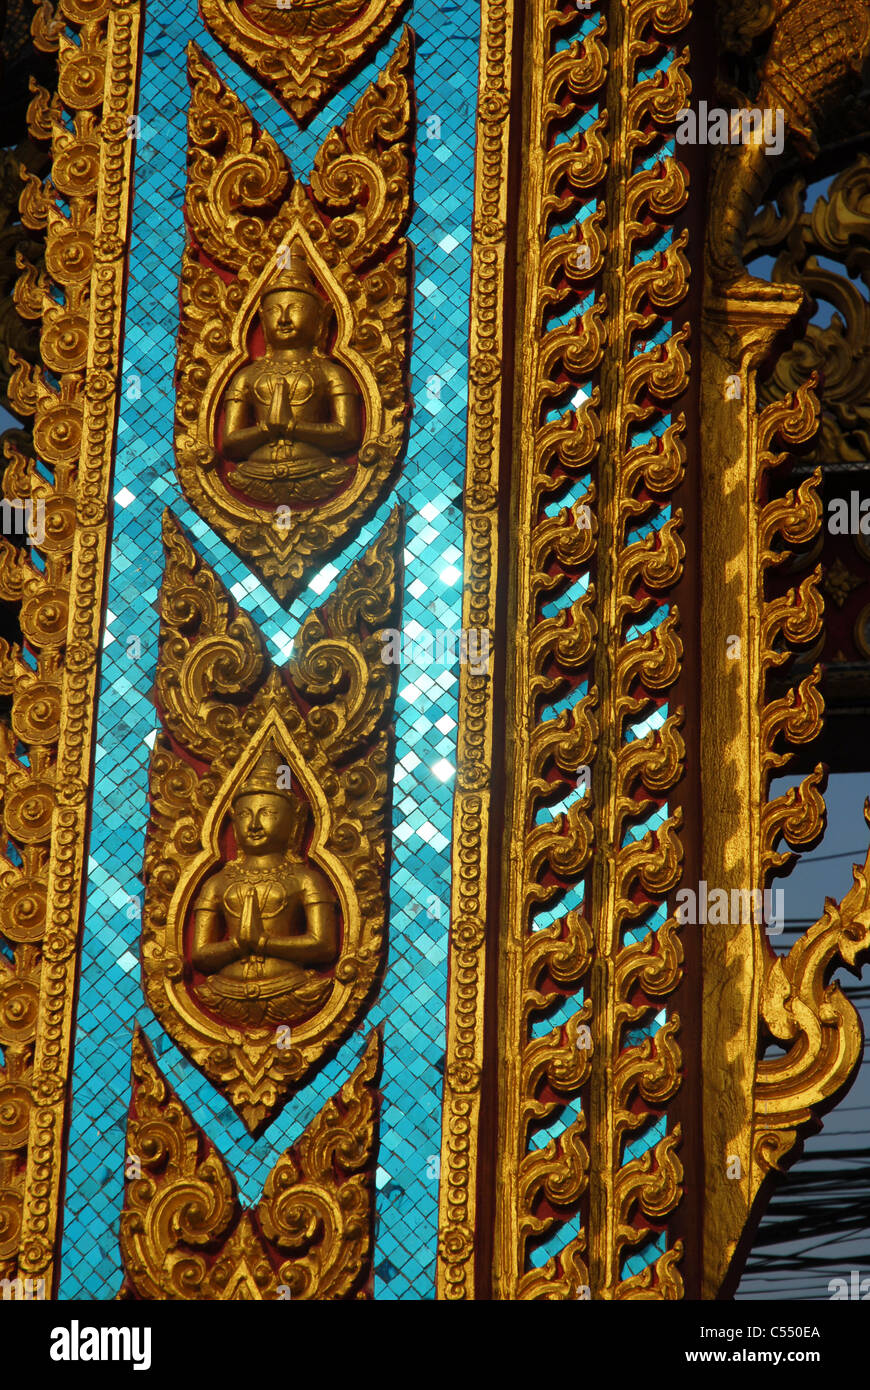 Wat Phuttha Bucha, Bangkok, Thailand. Stock Photo